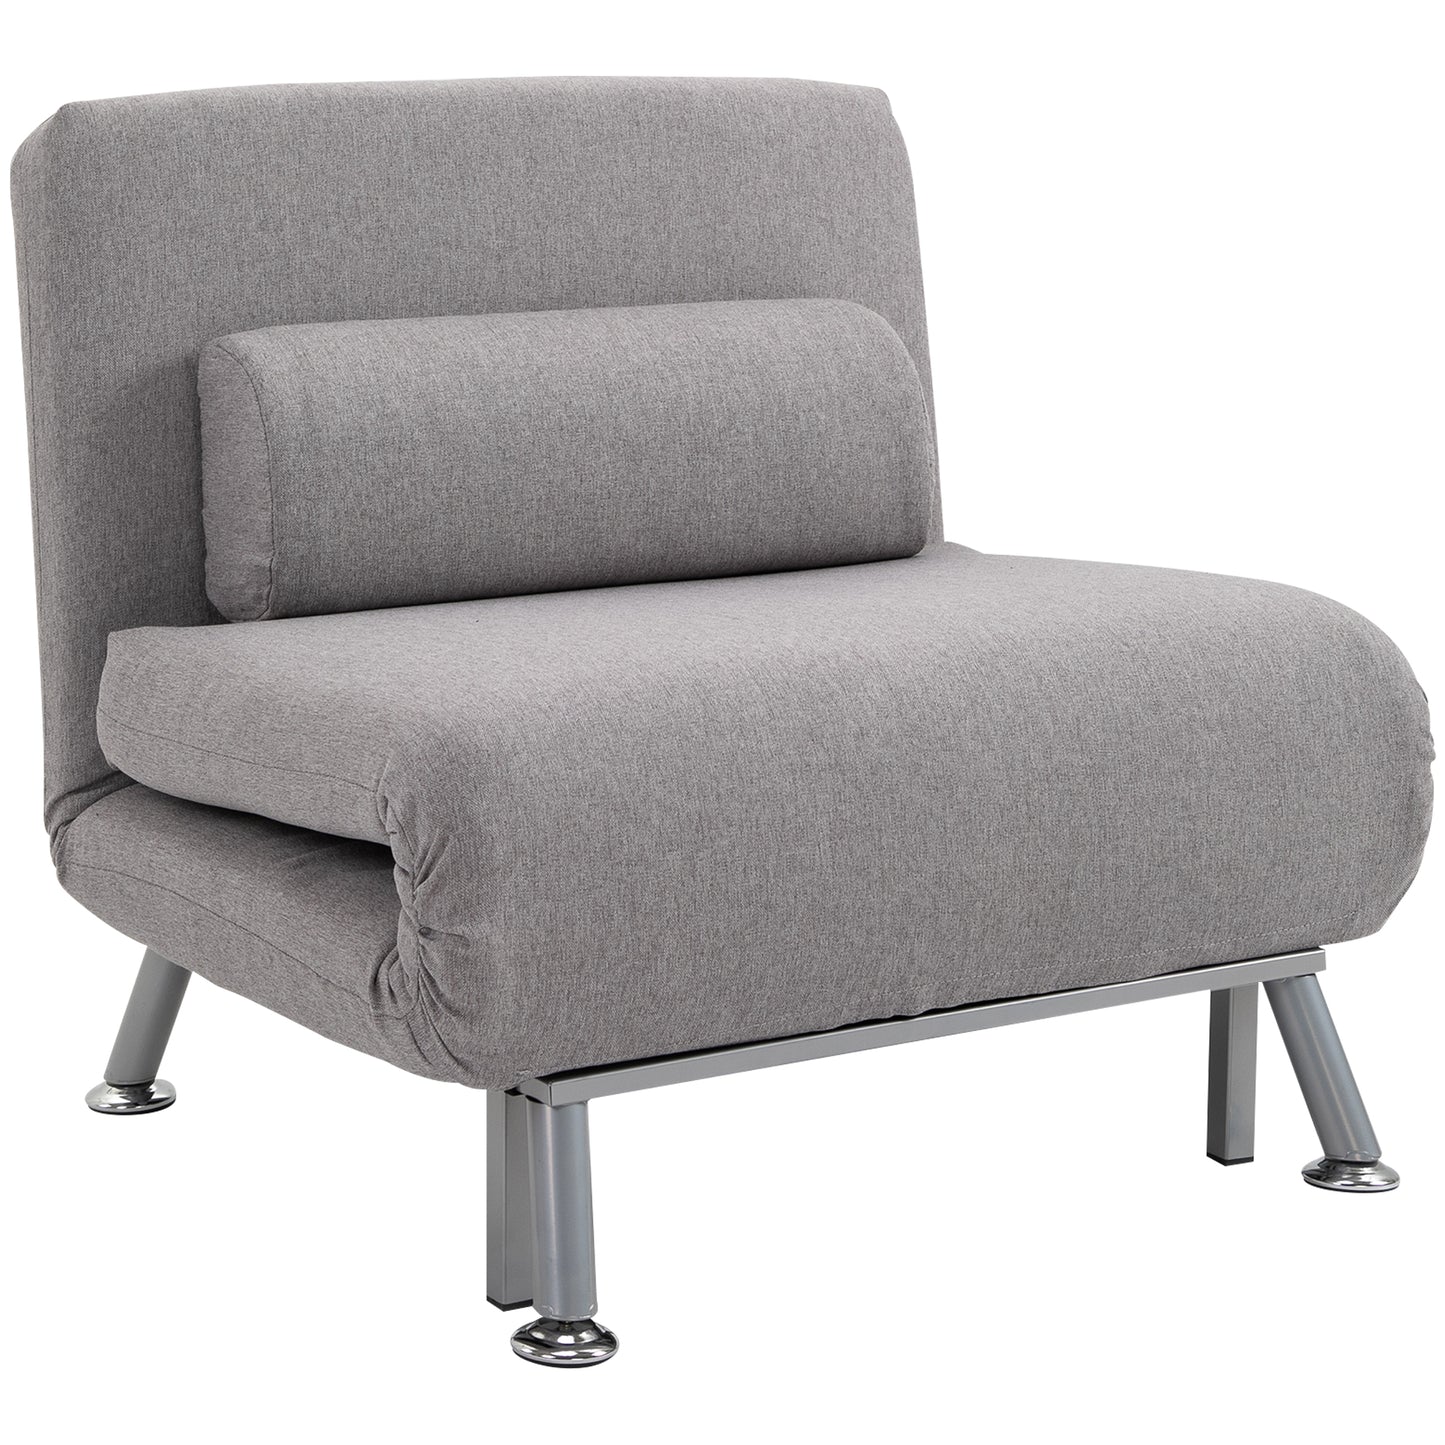 Single Sofa Bed Futon Chair Sleeper, Foldable Portable Lounge Couch, Living Room Furniture, Grey, HOMCOM, 2